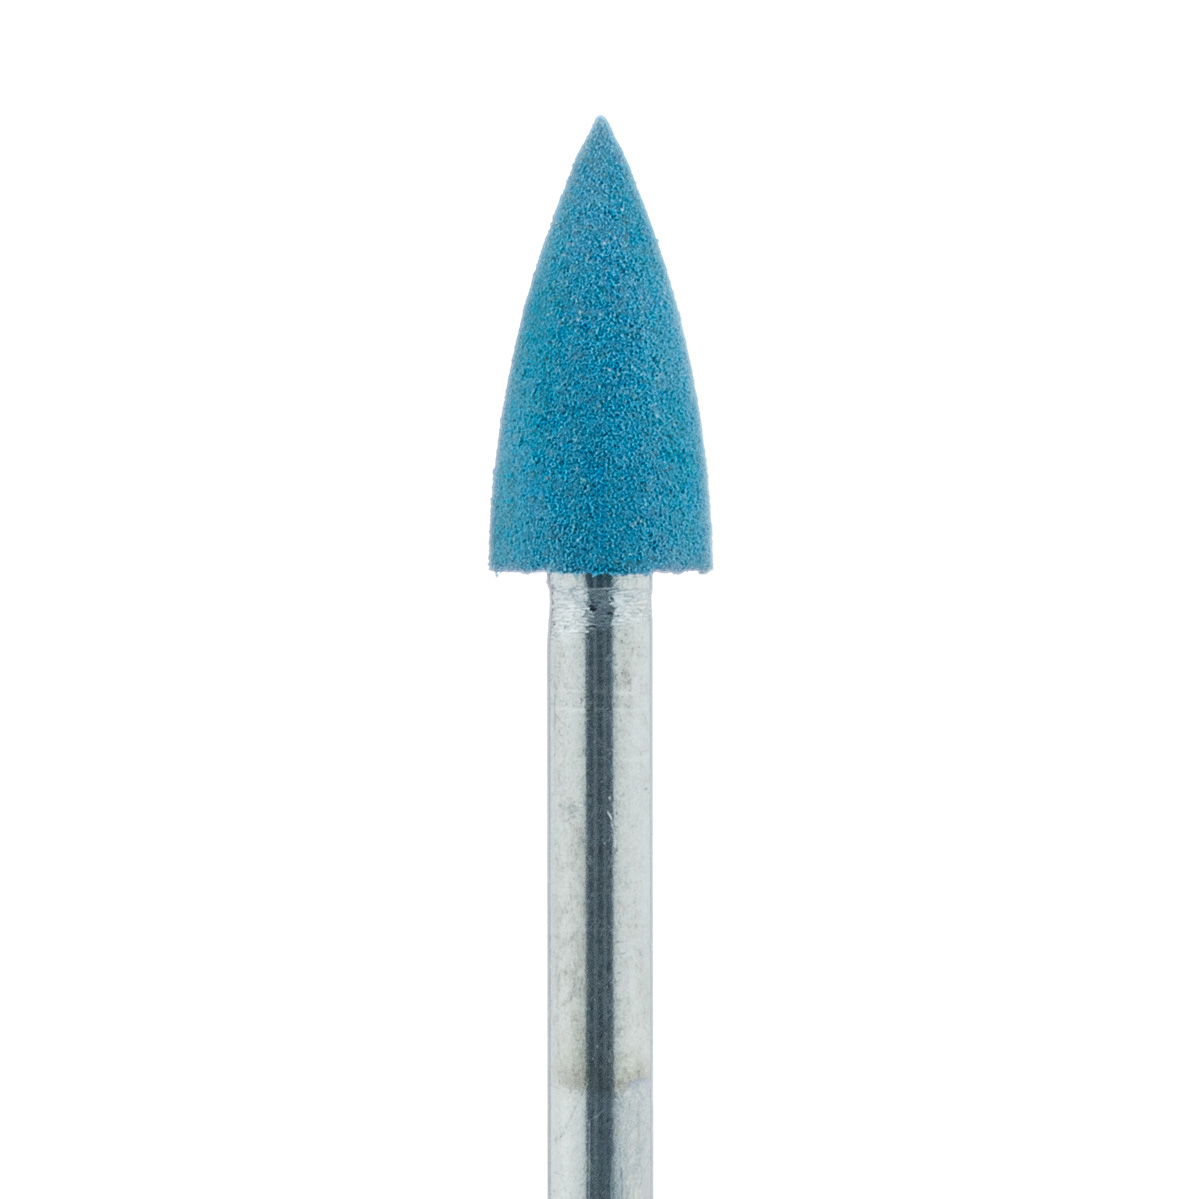 9741M-030-FG-BLU Polisher, Diamond Impregnated Porcelain Polisher, Point, Blue, Polishing, Medium, 3.0mm, FG